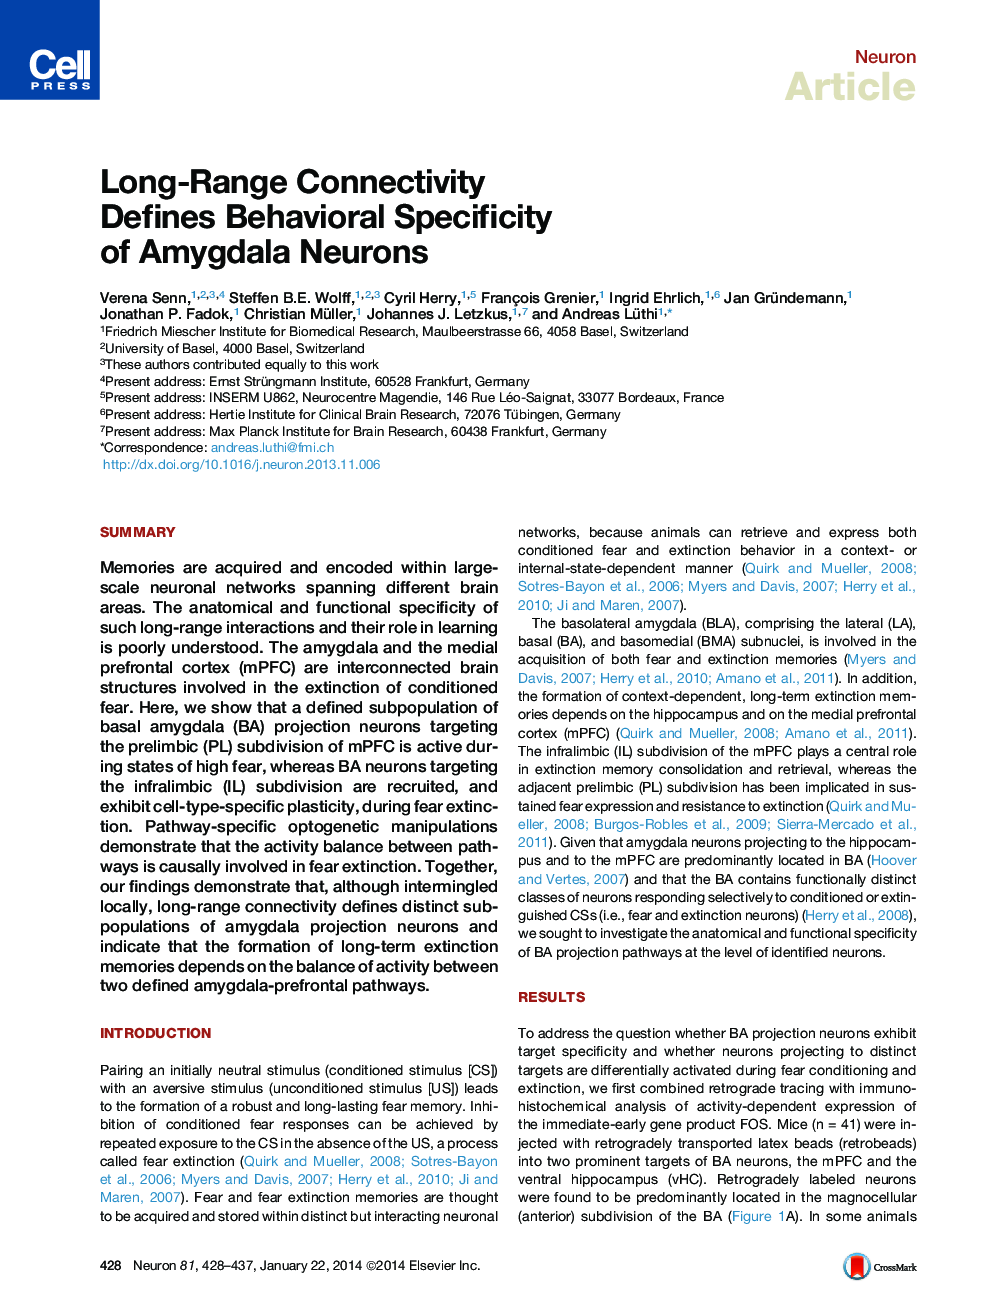 Long-Range Connectivity Defines Behavioral Specificity of Amygdala Neurons